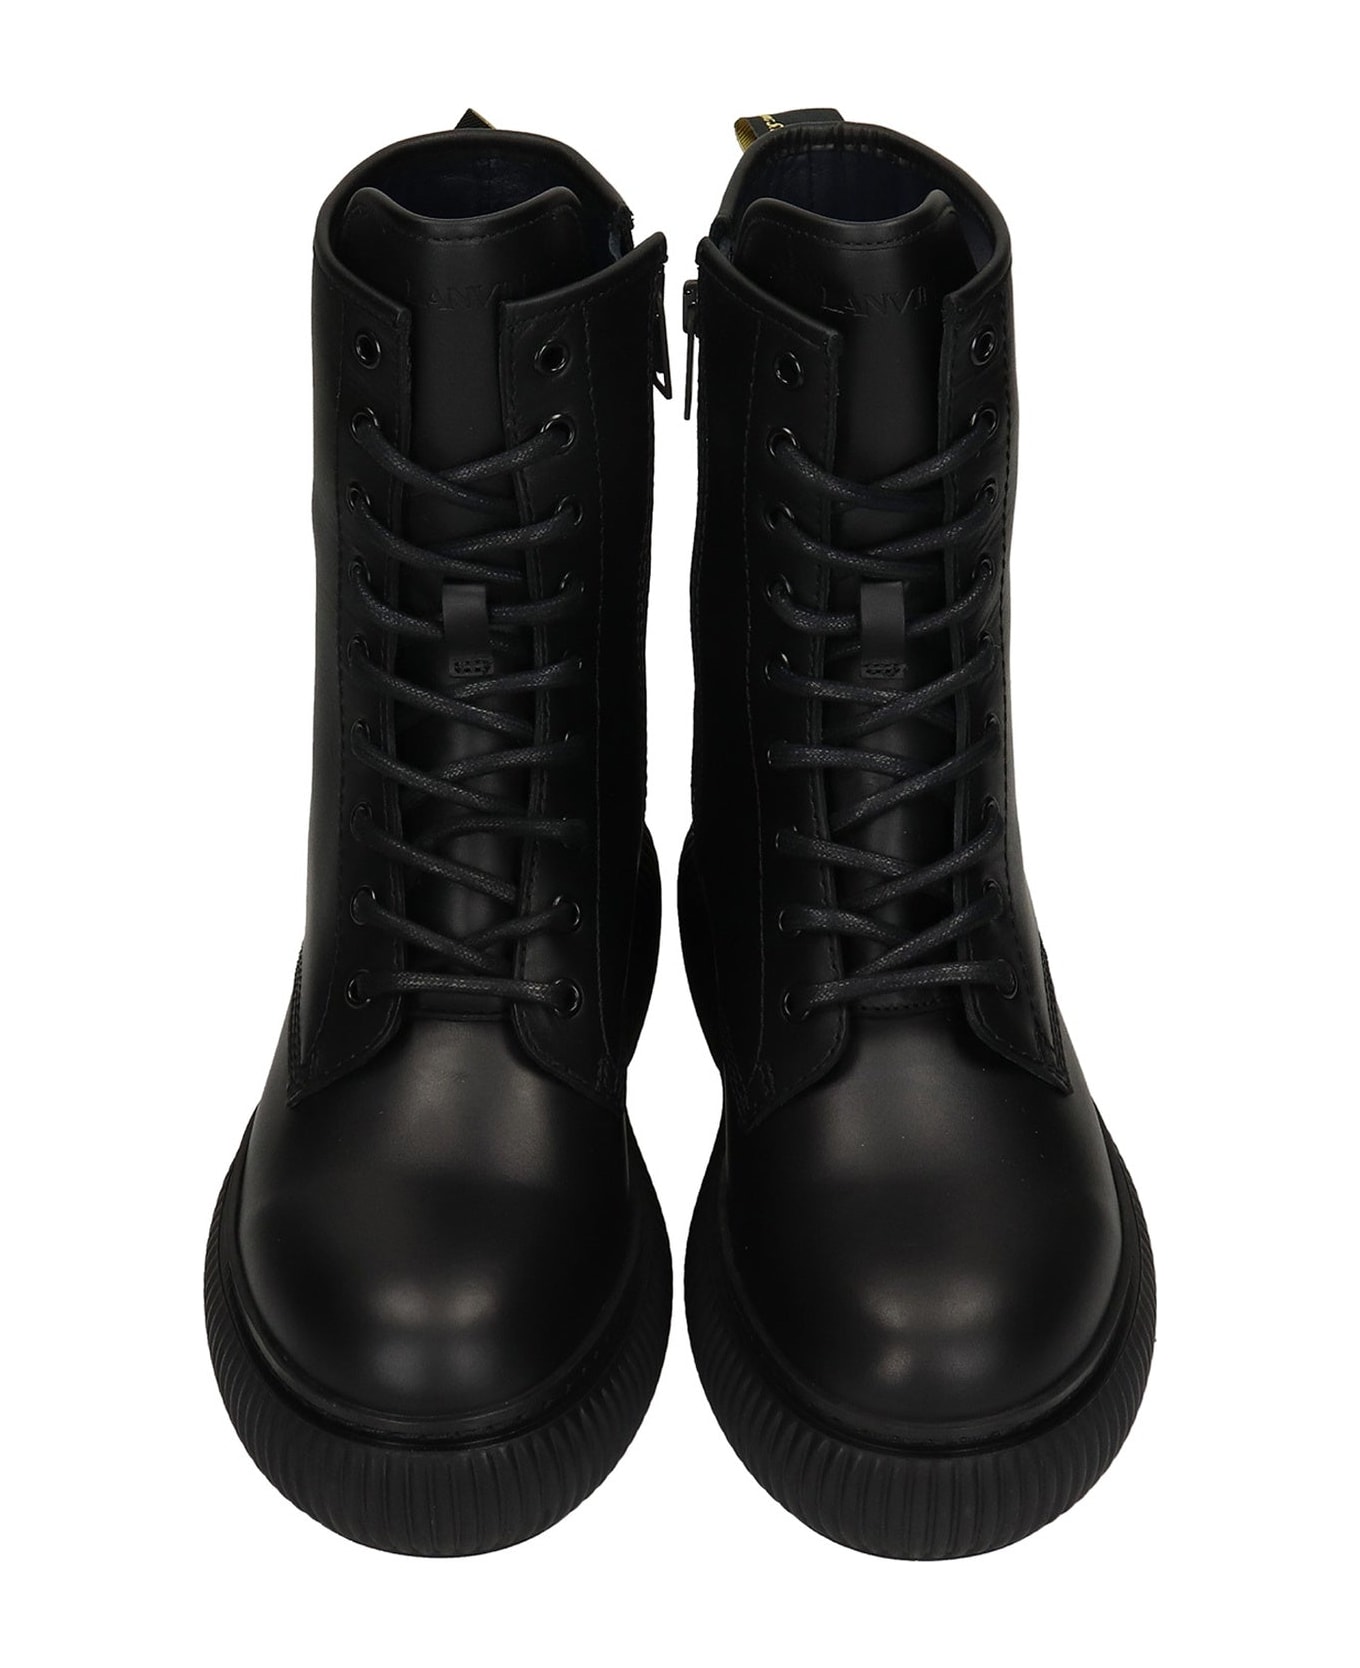 Lanvin Arpege Ankle Boots - Black ブーツ